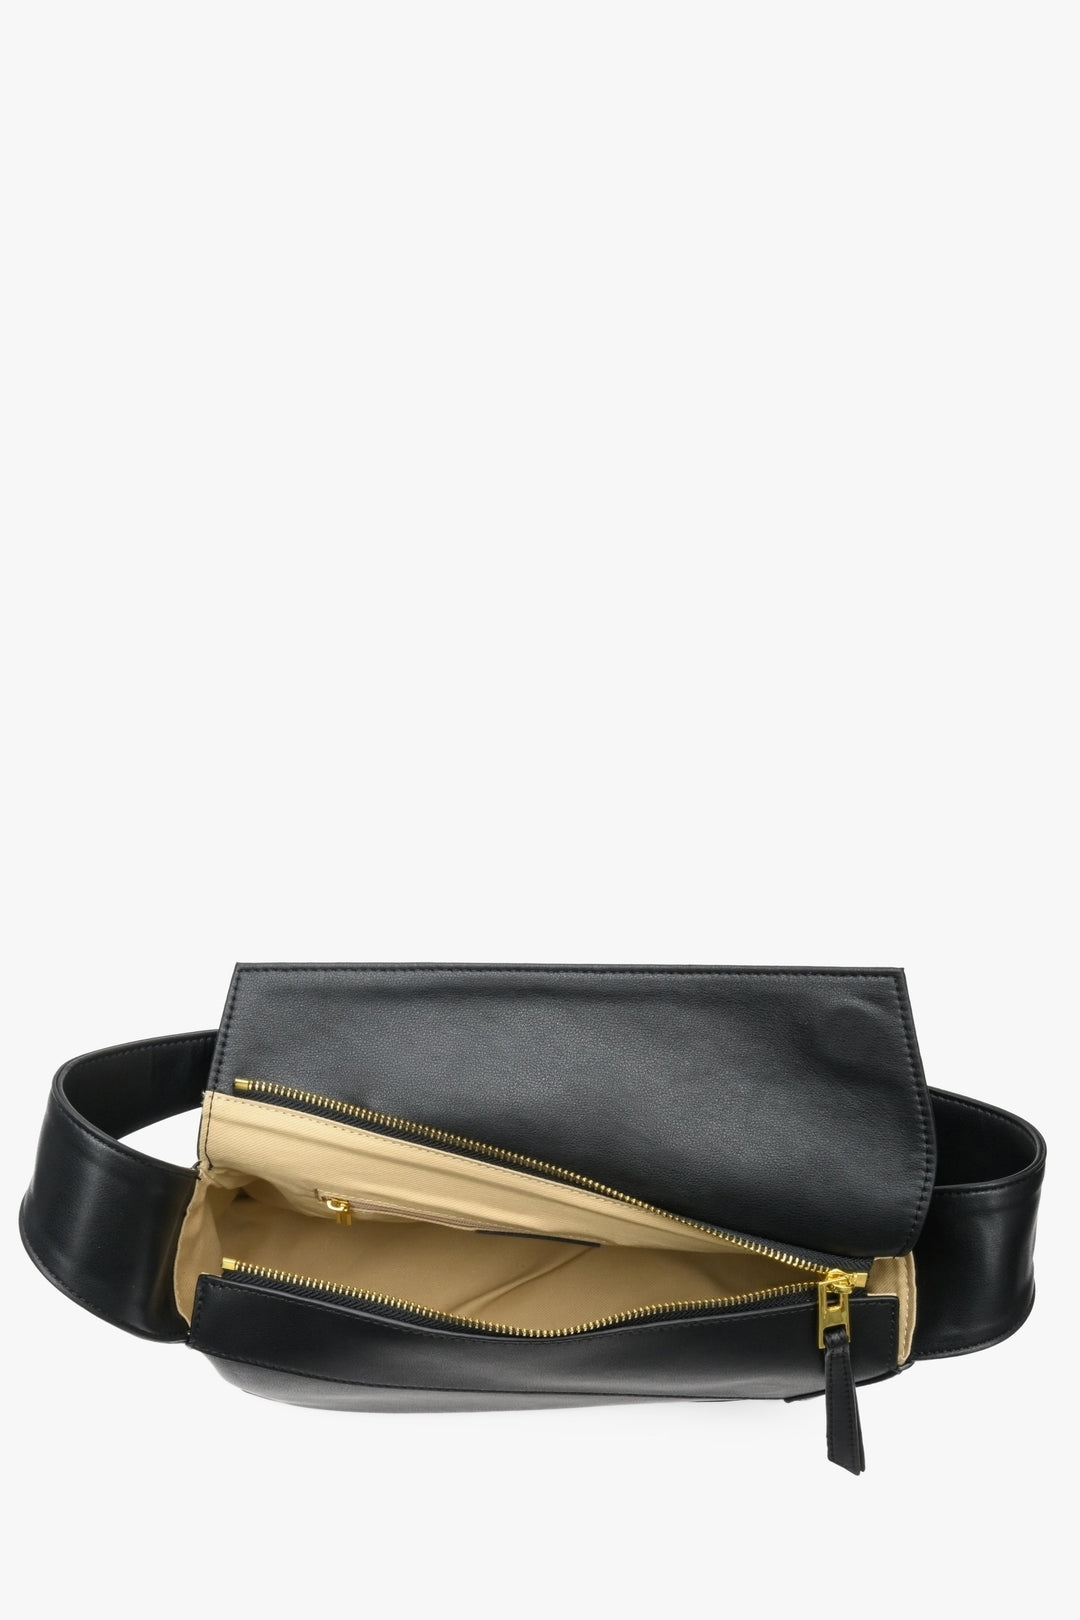 Women's handbag in black made of genuine leather by Estro - interior view.